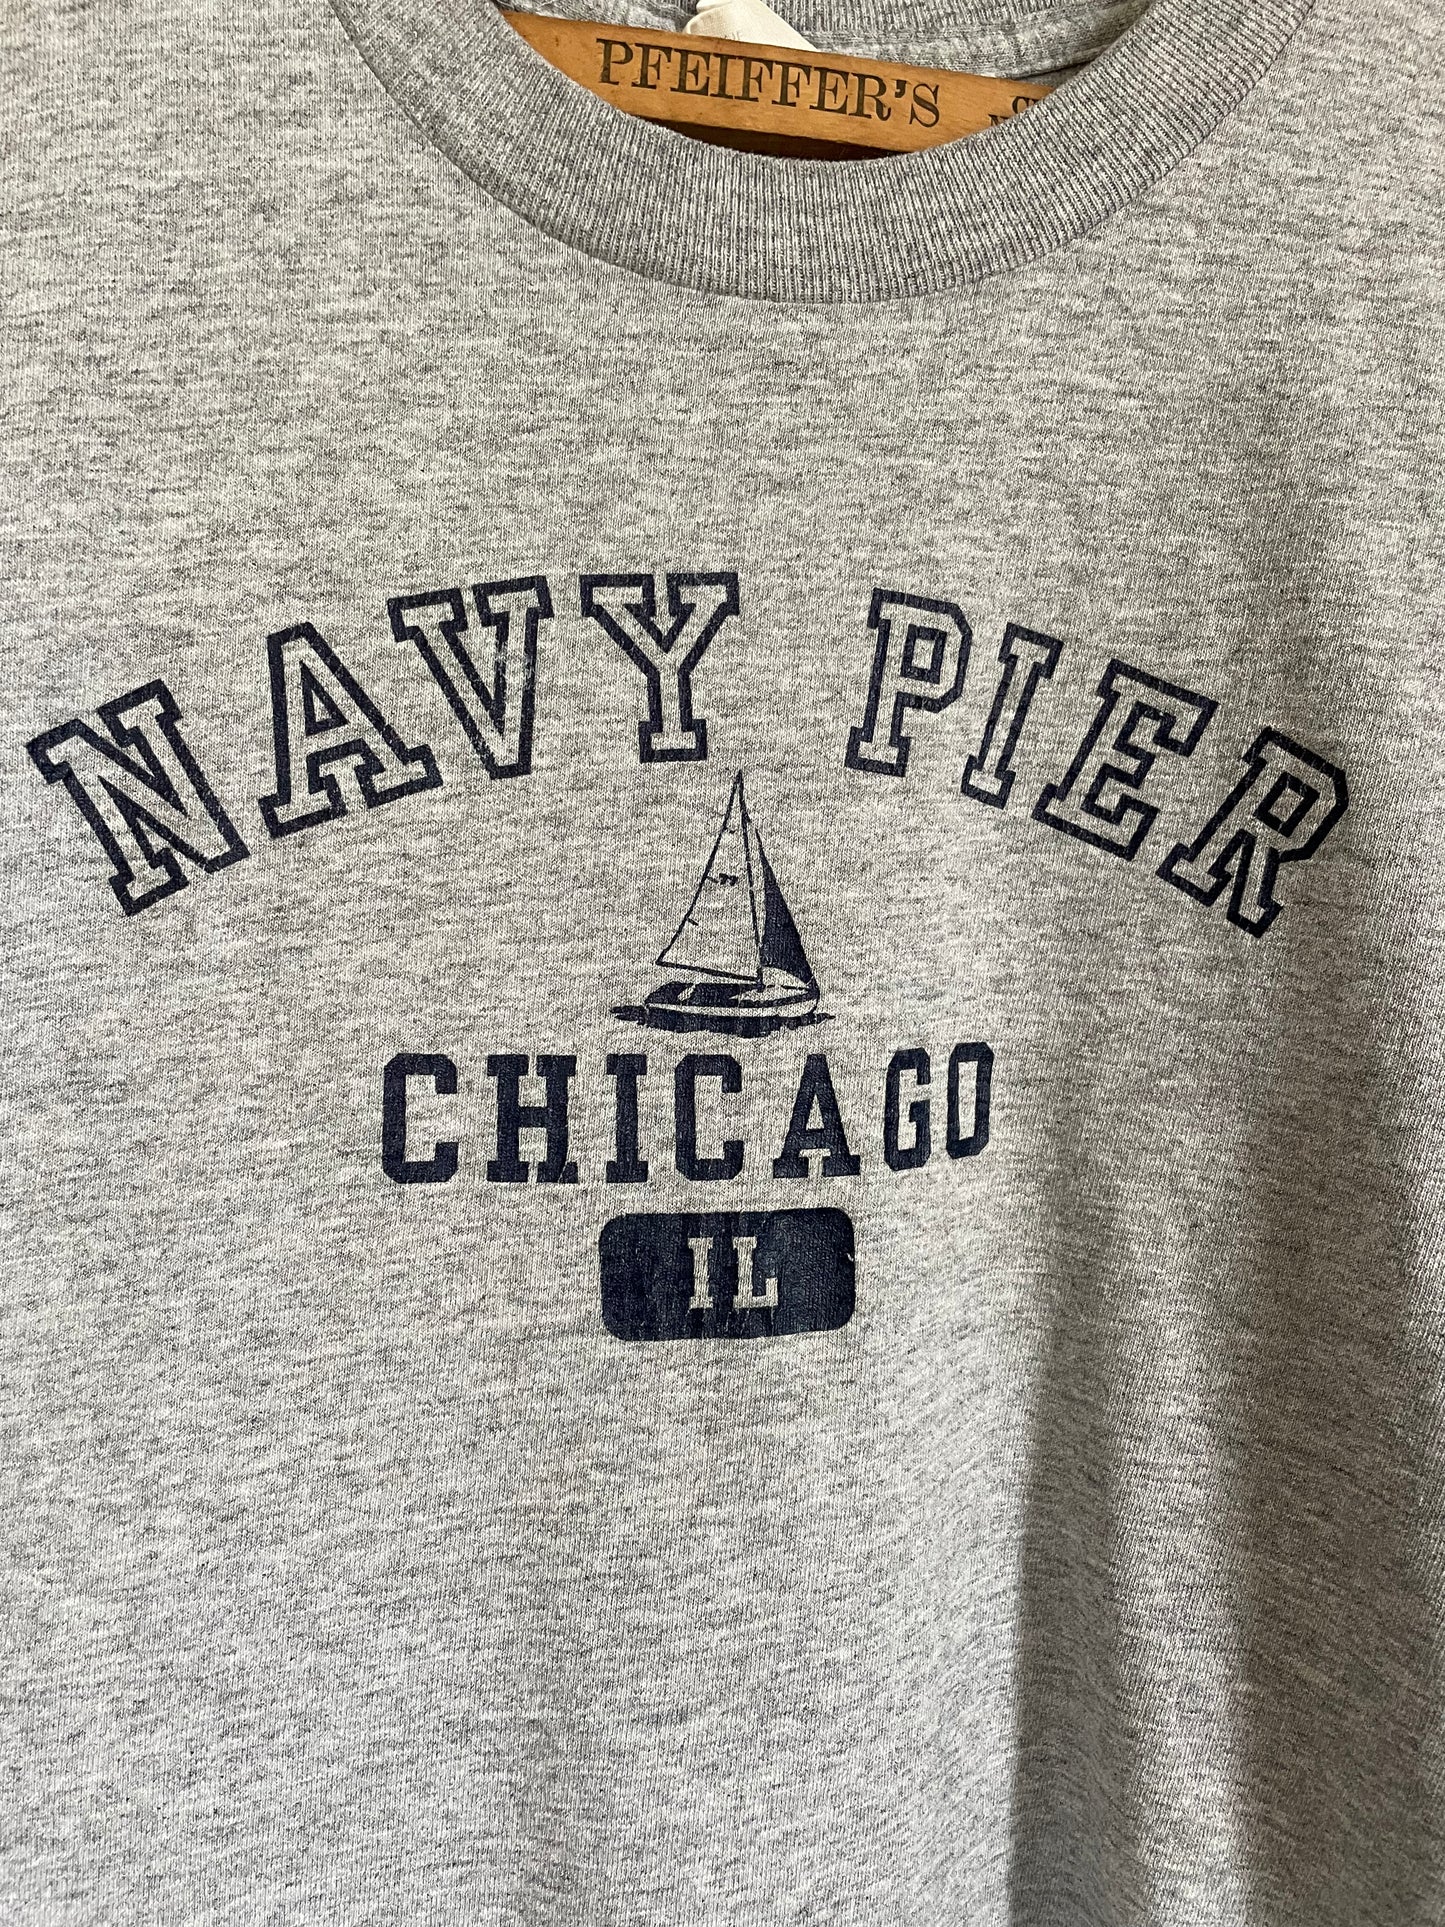 90s Navy Pier, Chicago, IL Tee